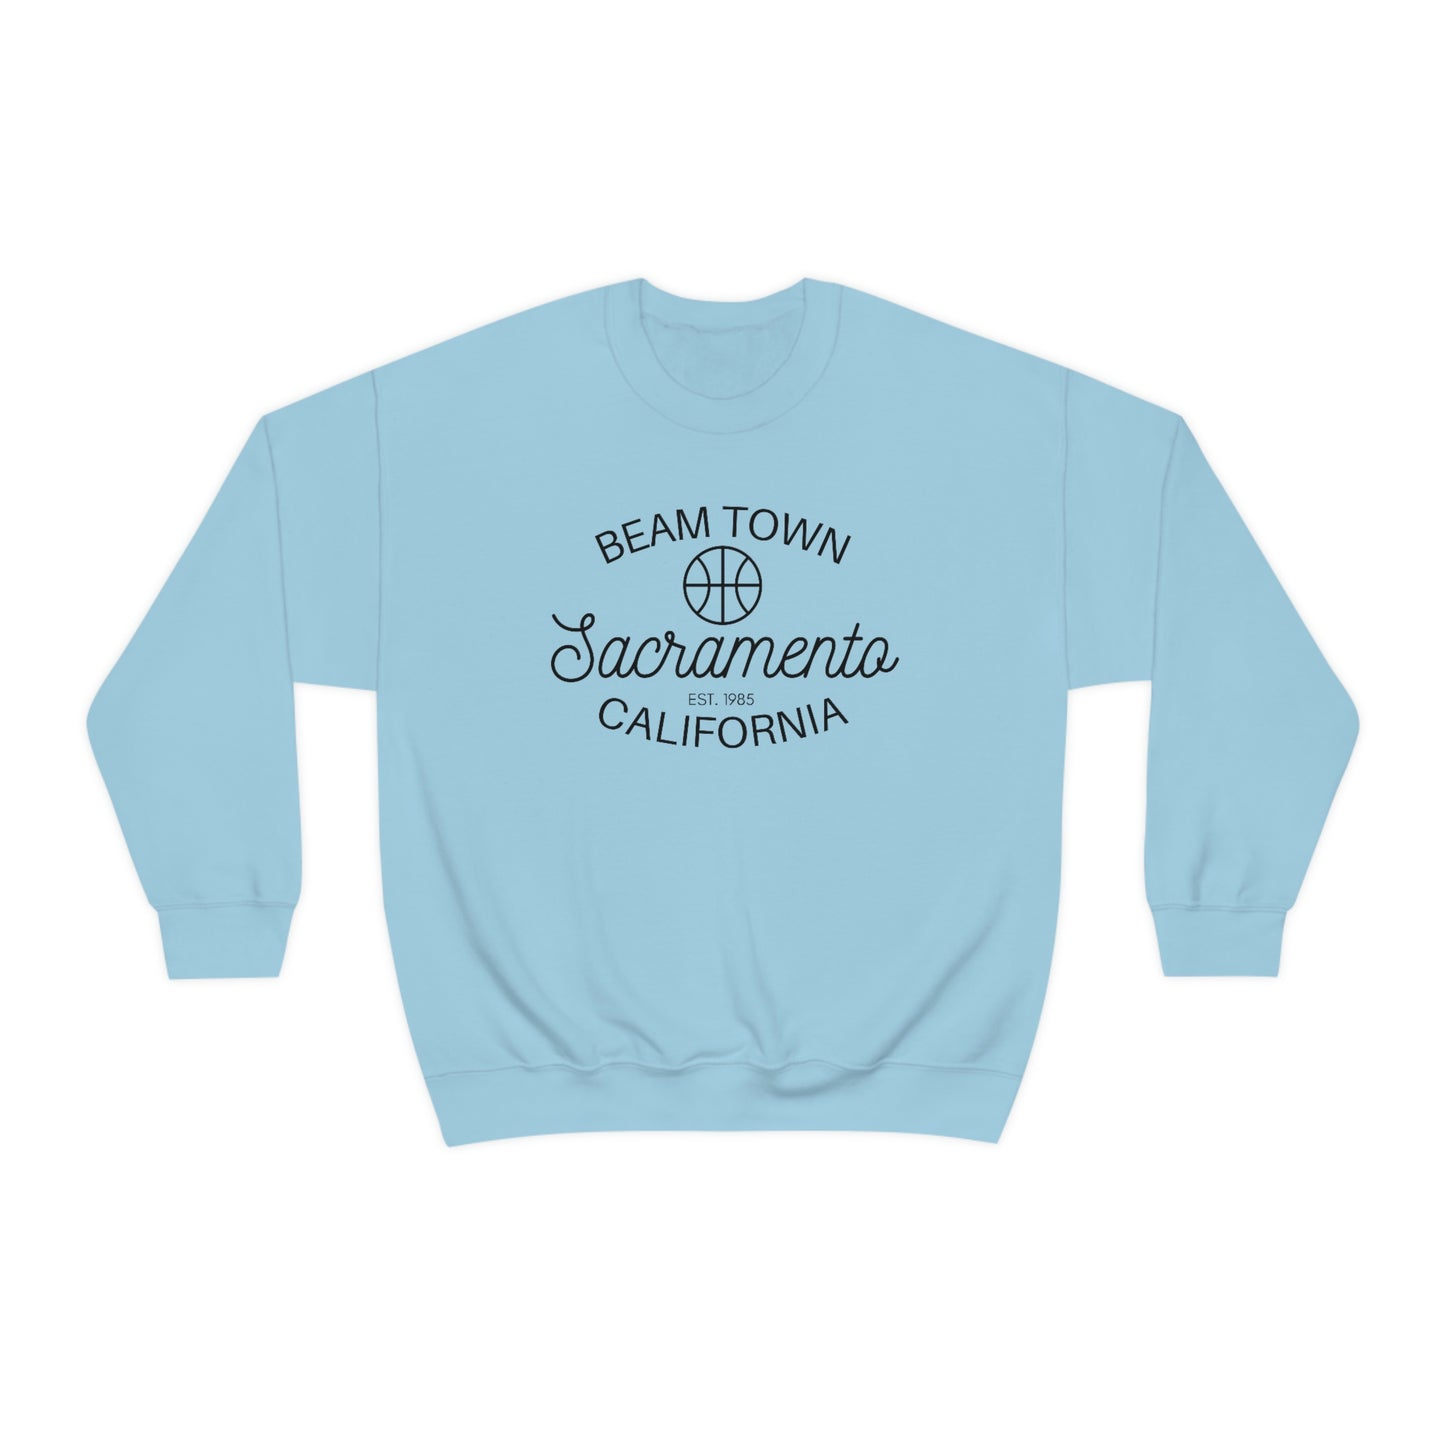 Retro Beam Town Sacramento Basketball Sweatshirt, Sac Town Basketball Sweater, Sac Team Fan Shirt, Light the Beam, Retro Style Beam Team, Light Blue